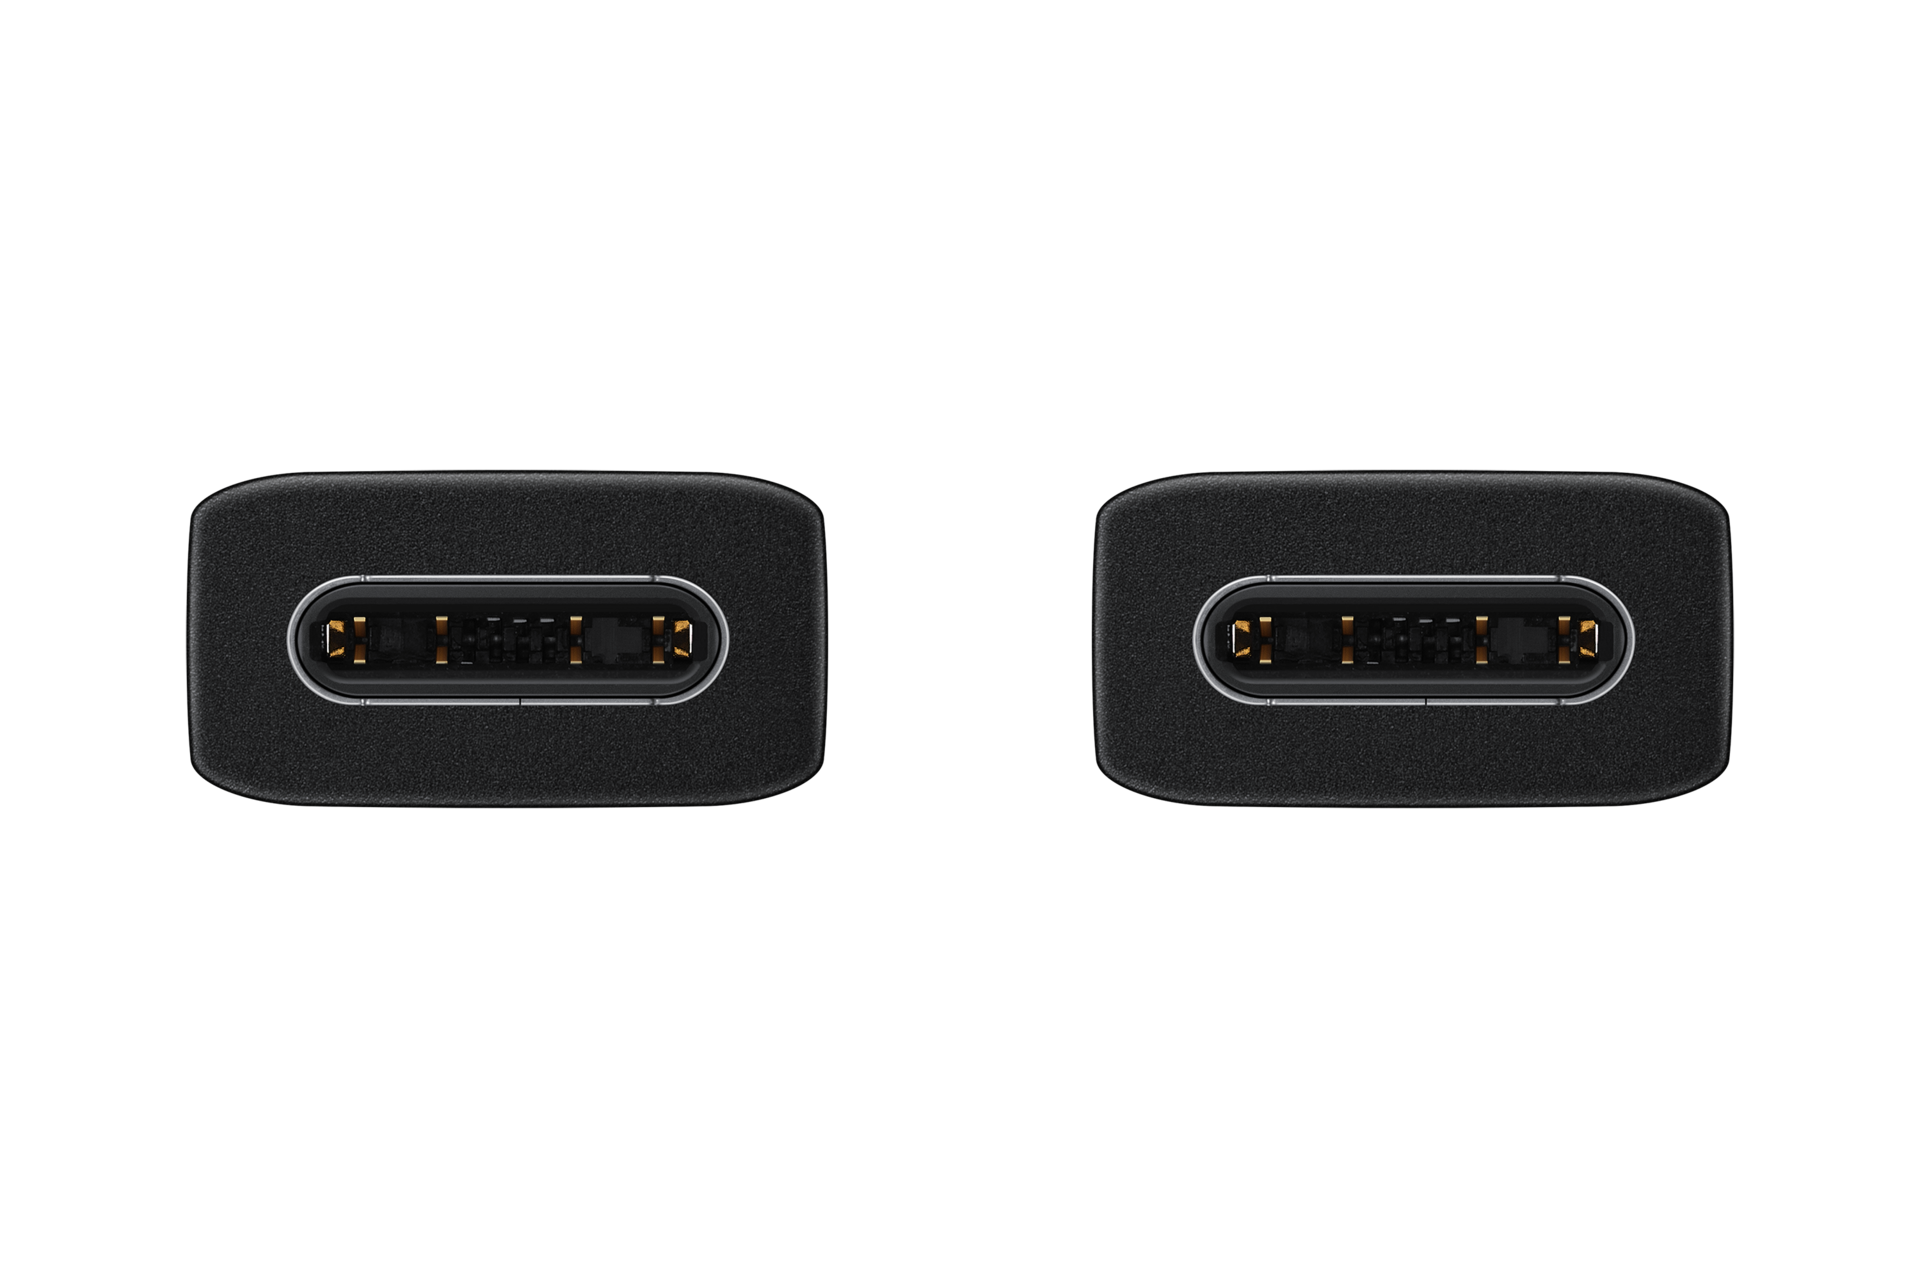 USB C to C 케이블 (5 A, 1.0 m) (블랙) 제품 케이블 단면 이미지 